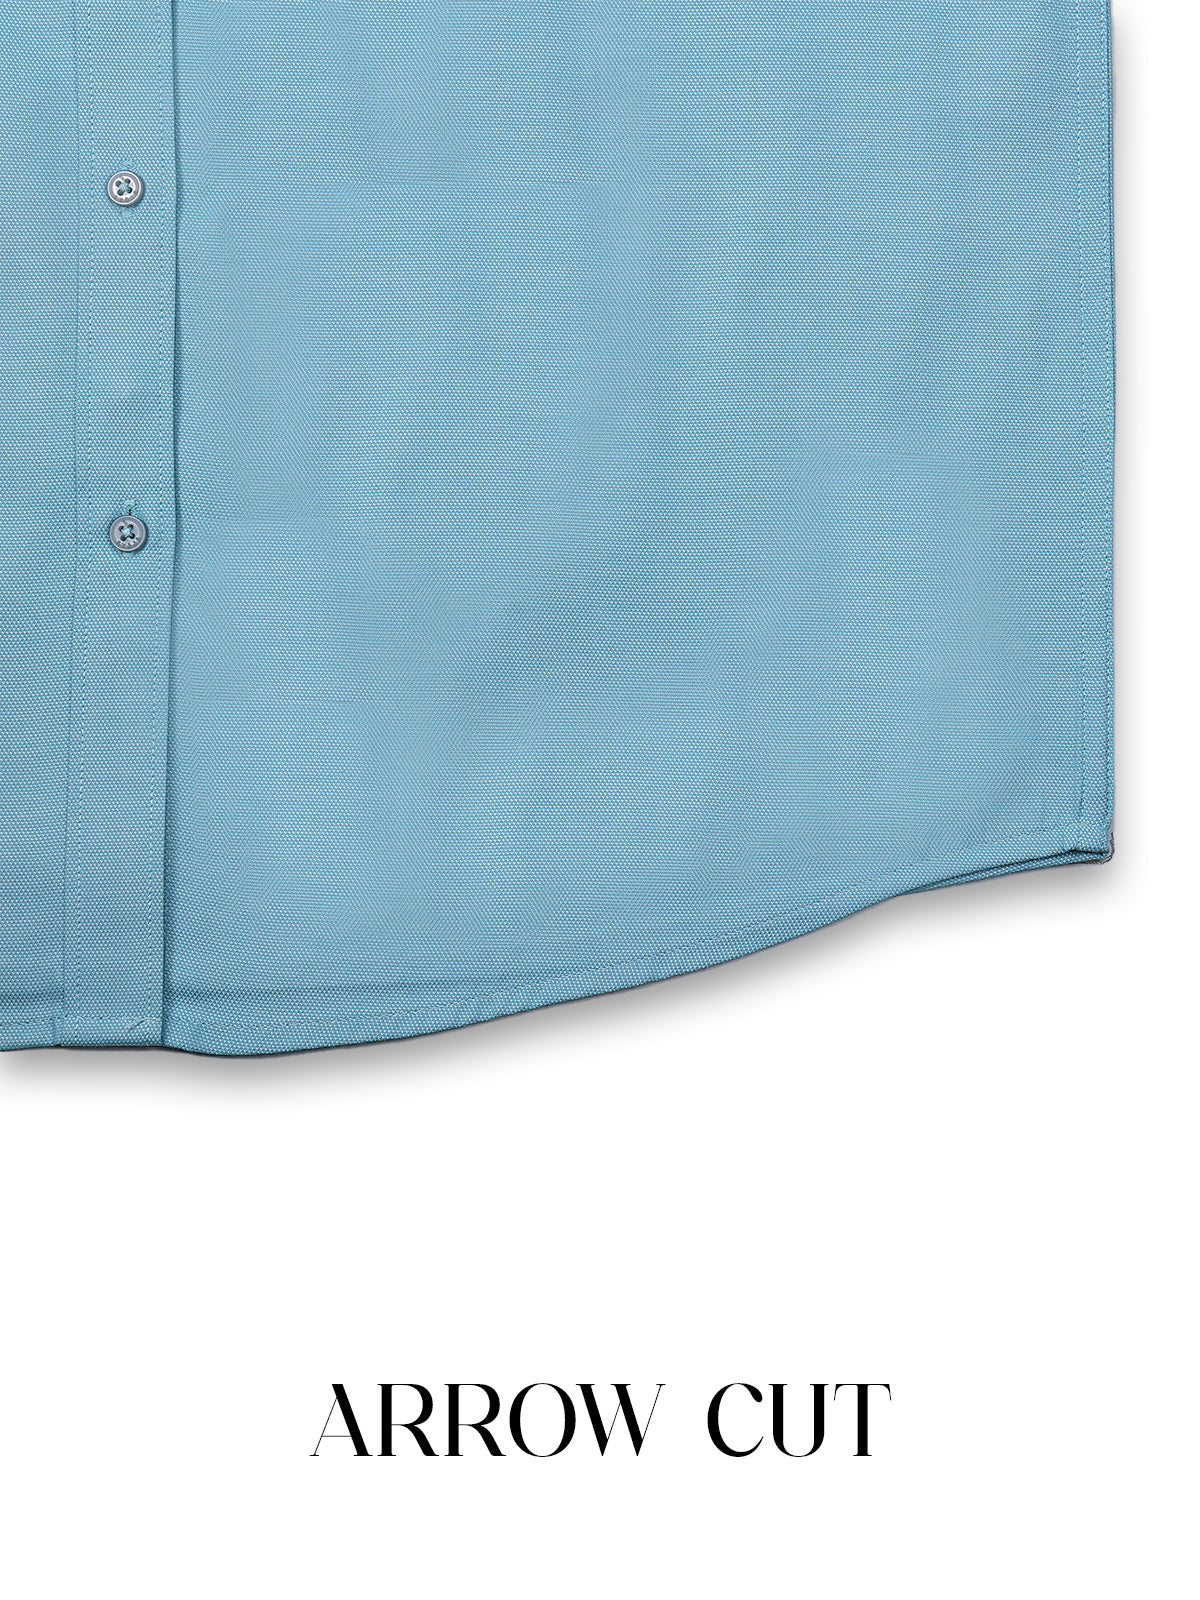 Alaya Cotton Majesty Color Shirt & Fancy Border Single Dhoti